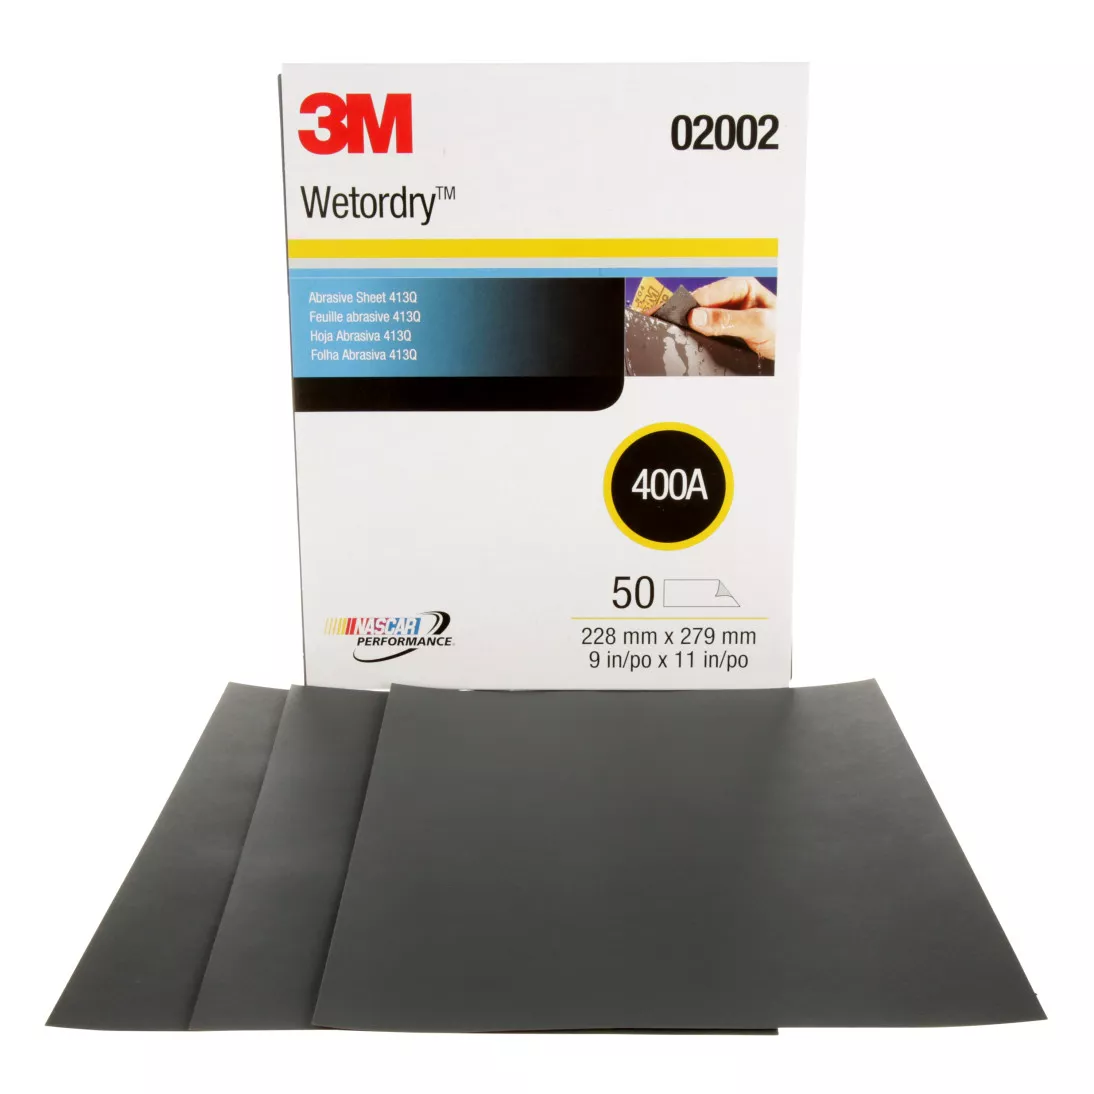 3M™ Wetordry™ Abrasive Sheet 413Q, 02002, 400, 9 in x 11 in, 50 sheets
per carton, 5 cartons per case